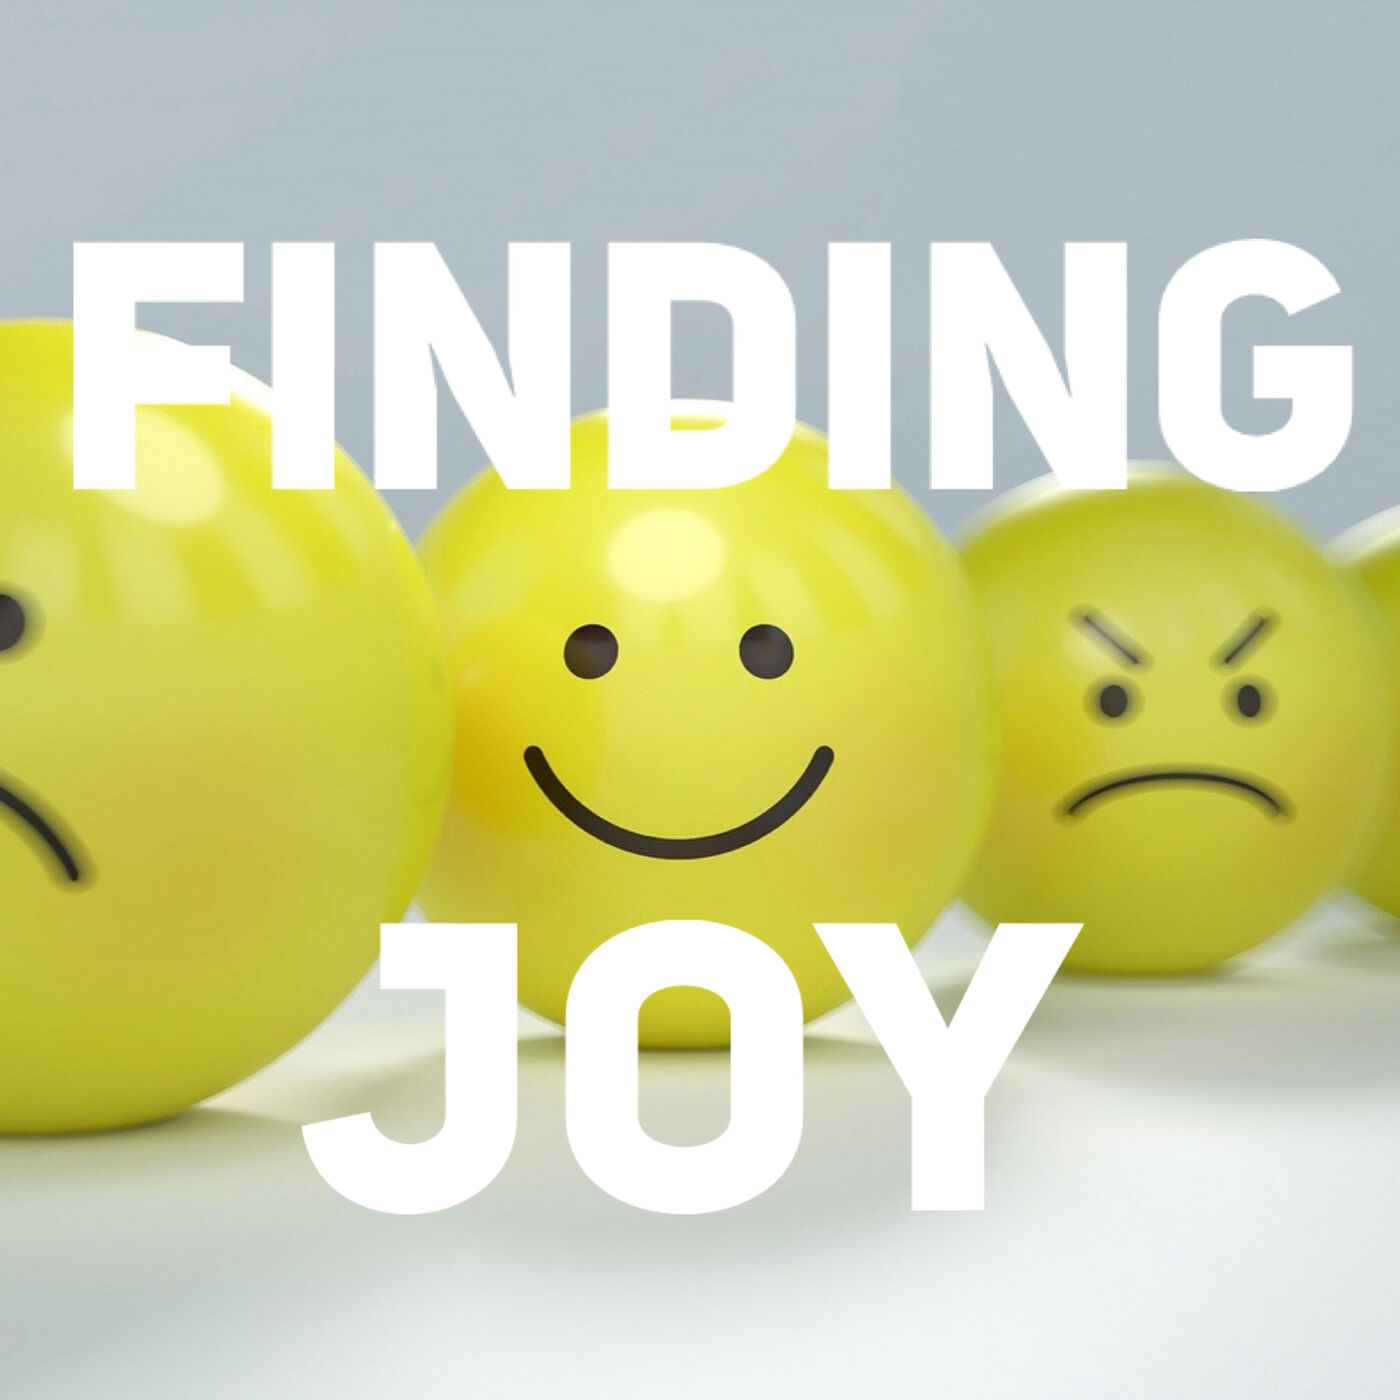 Finding Joy in Life